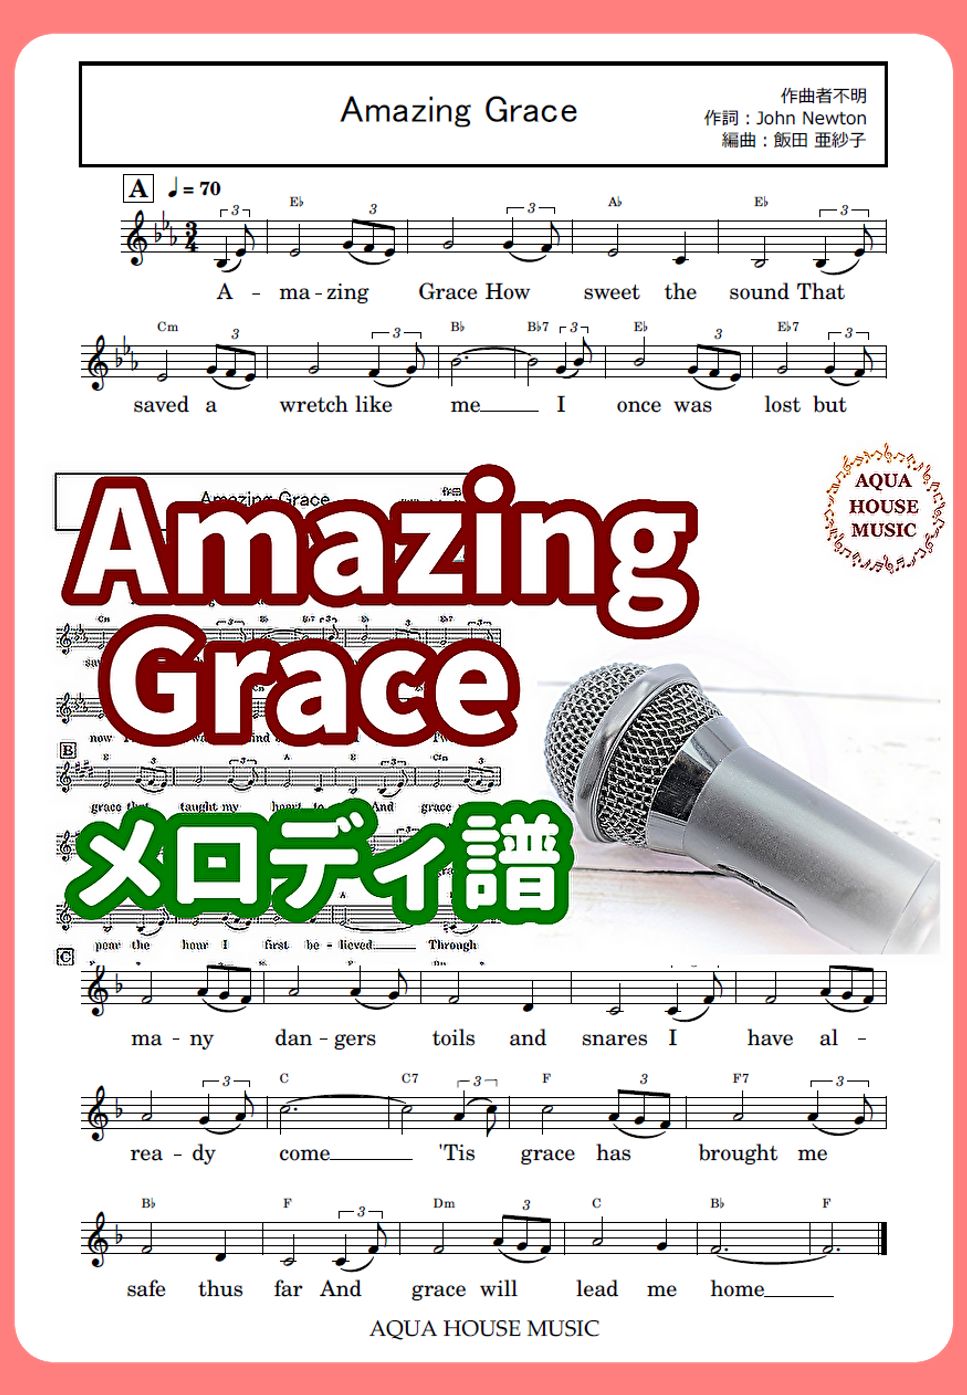 Amazing Grace (歌詞・コード付き|Key=E♭) by 飯田 亜紗子